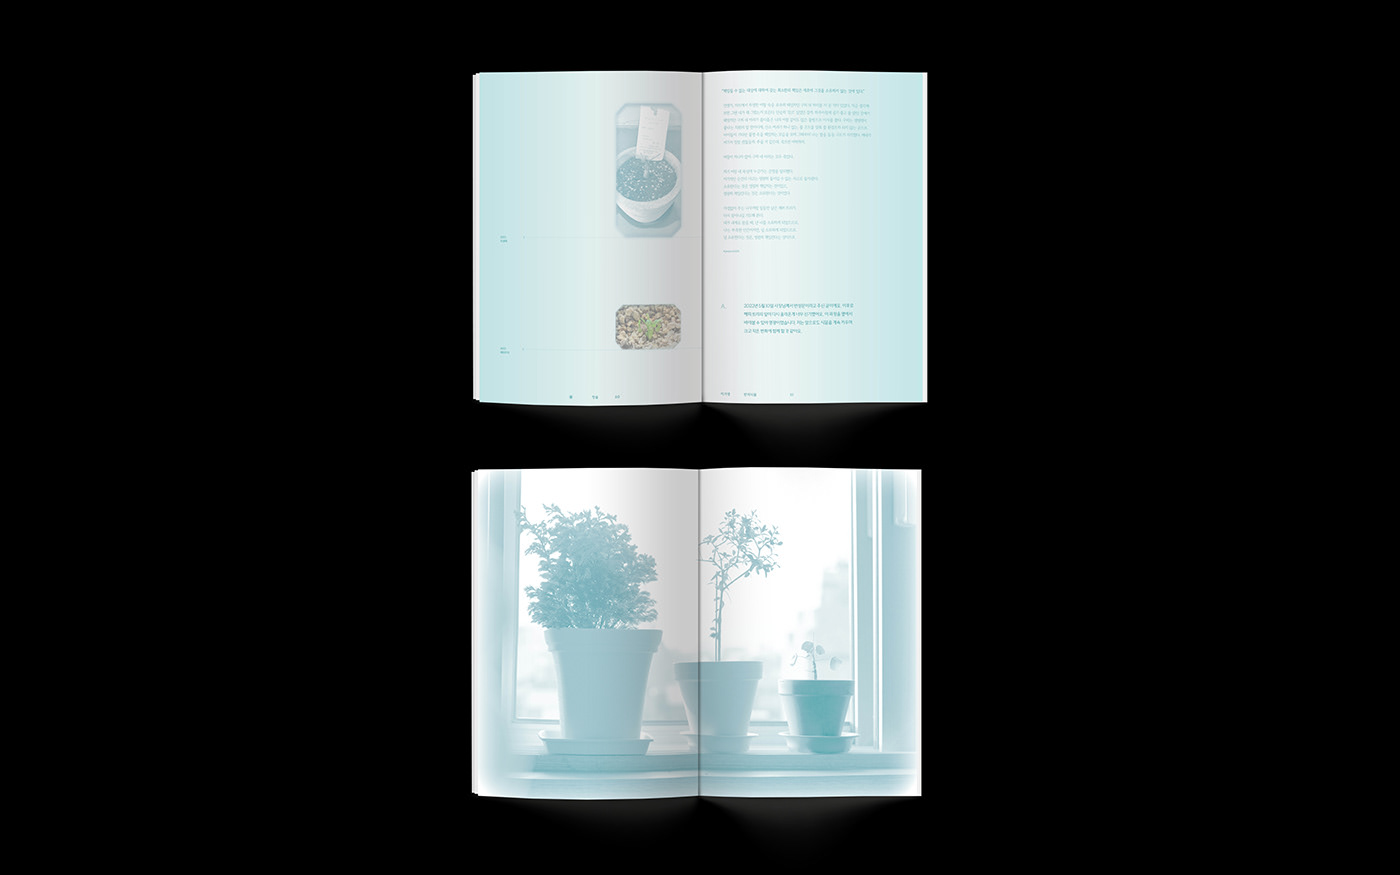 digitalpublishing interview hknudesign 소나무 book design 편집디자인 북디자인 InDesign